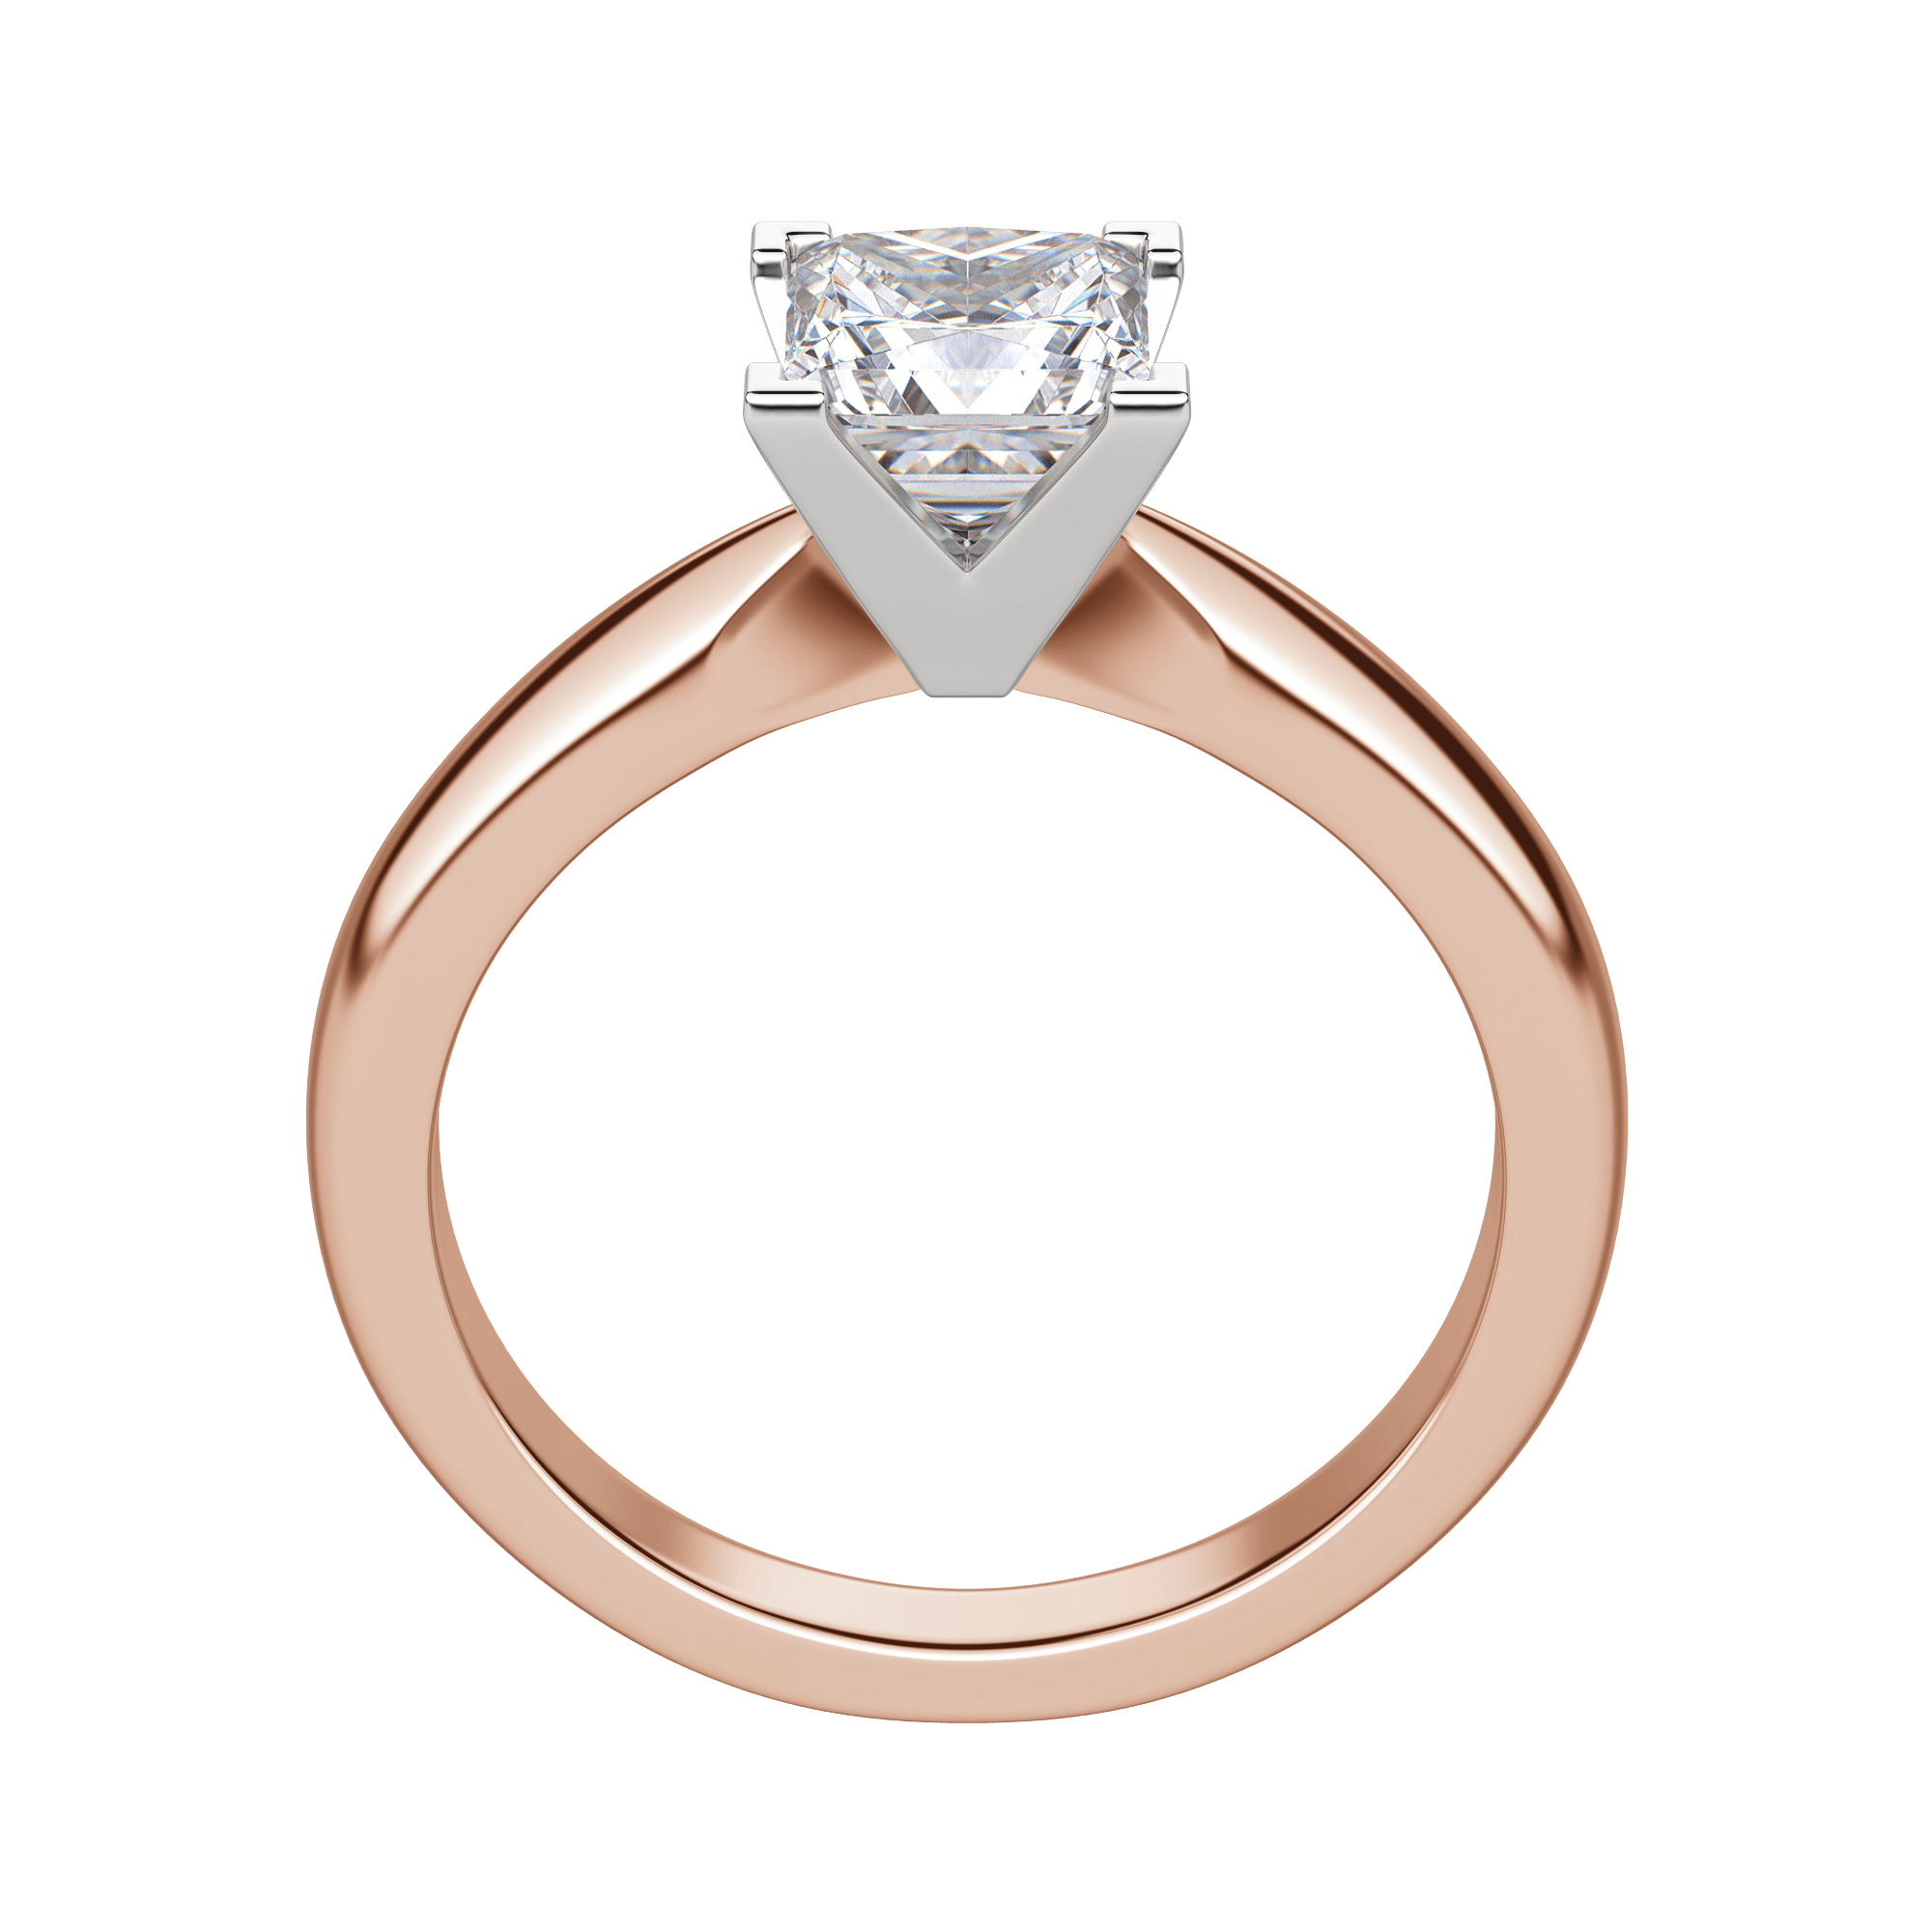 Isle Princess Cut Engagement Ring, Hover, 14K Rose Gold, 